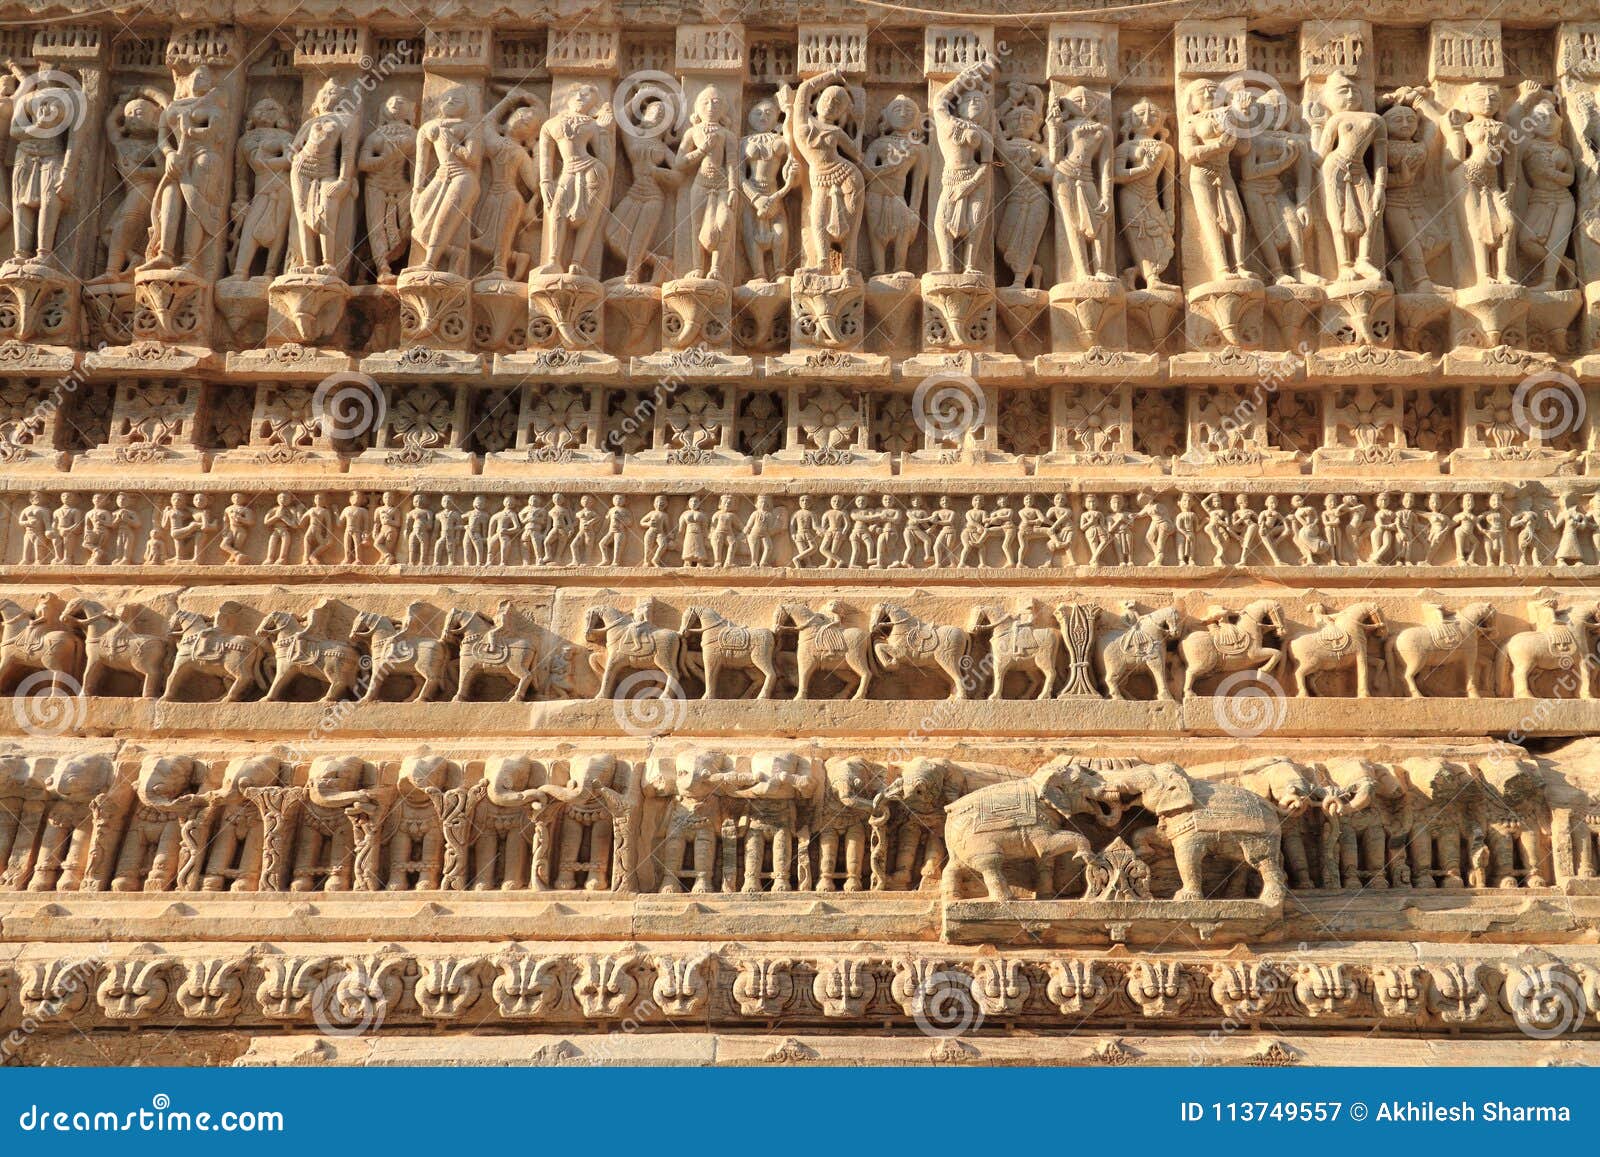 Jagdish Temple Stone Carvings, Udaipur, Rajasthan, Indien. Jagdish Temple Stone Carvings aus einem einzelnen Stein heraus, Udaipur, Rajasthan, Indien